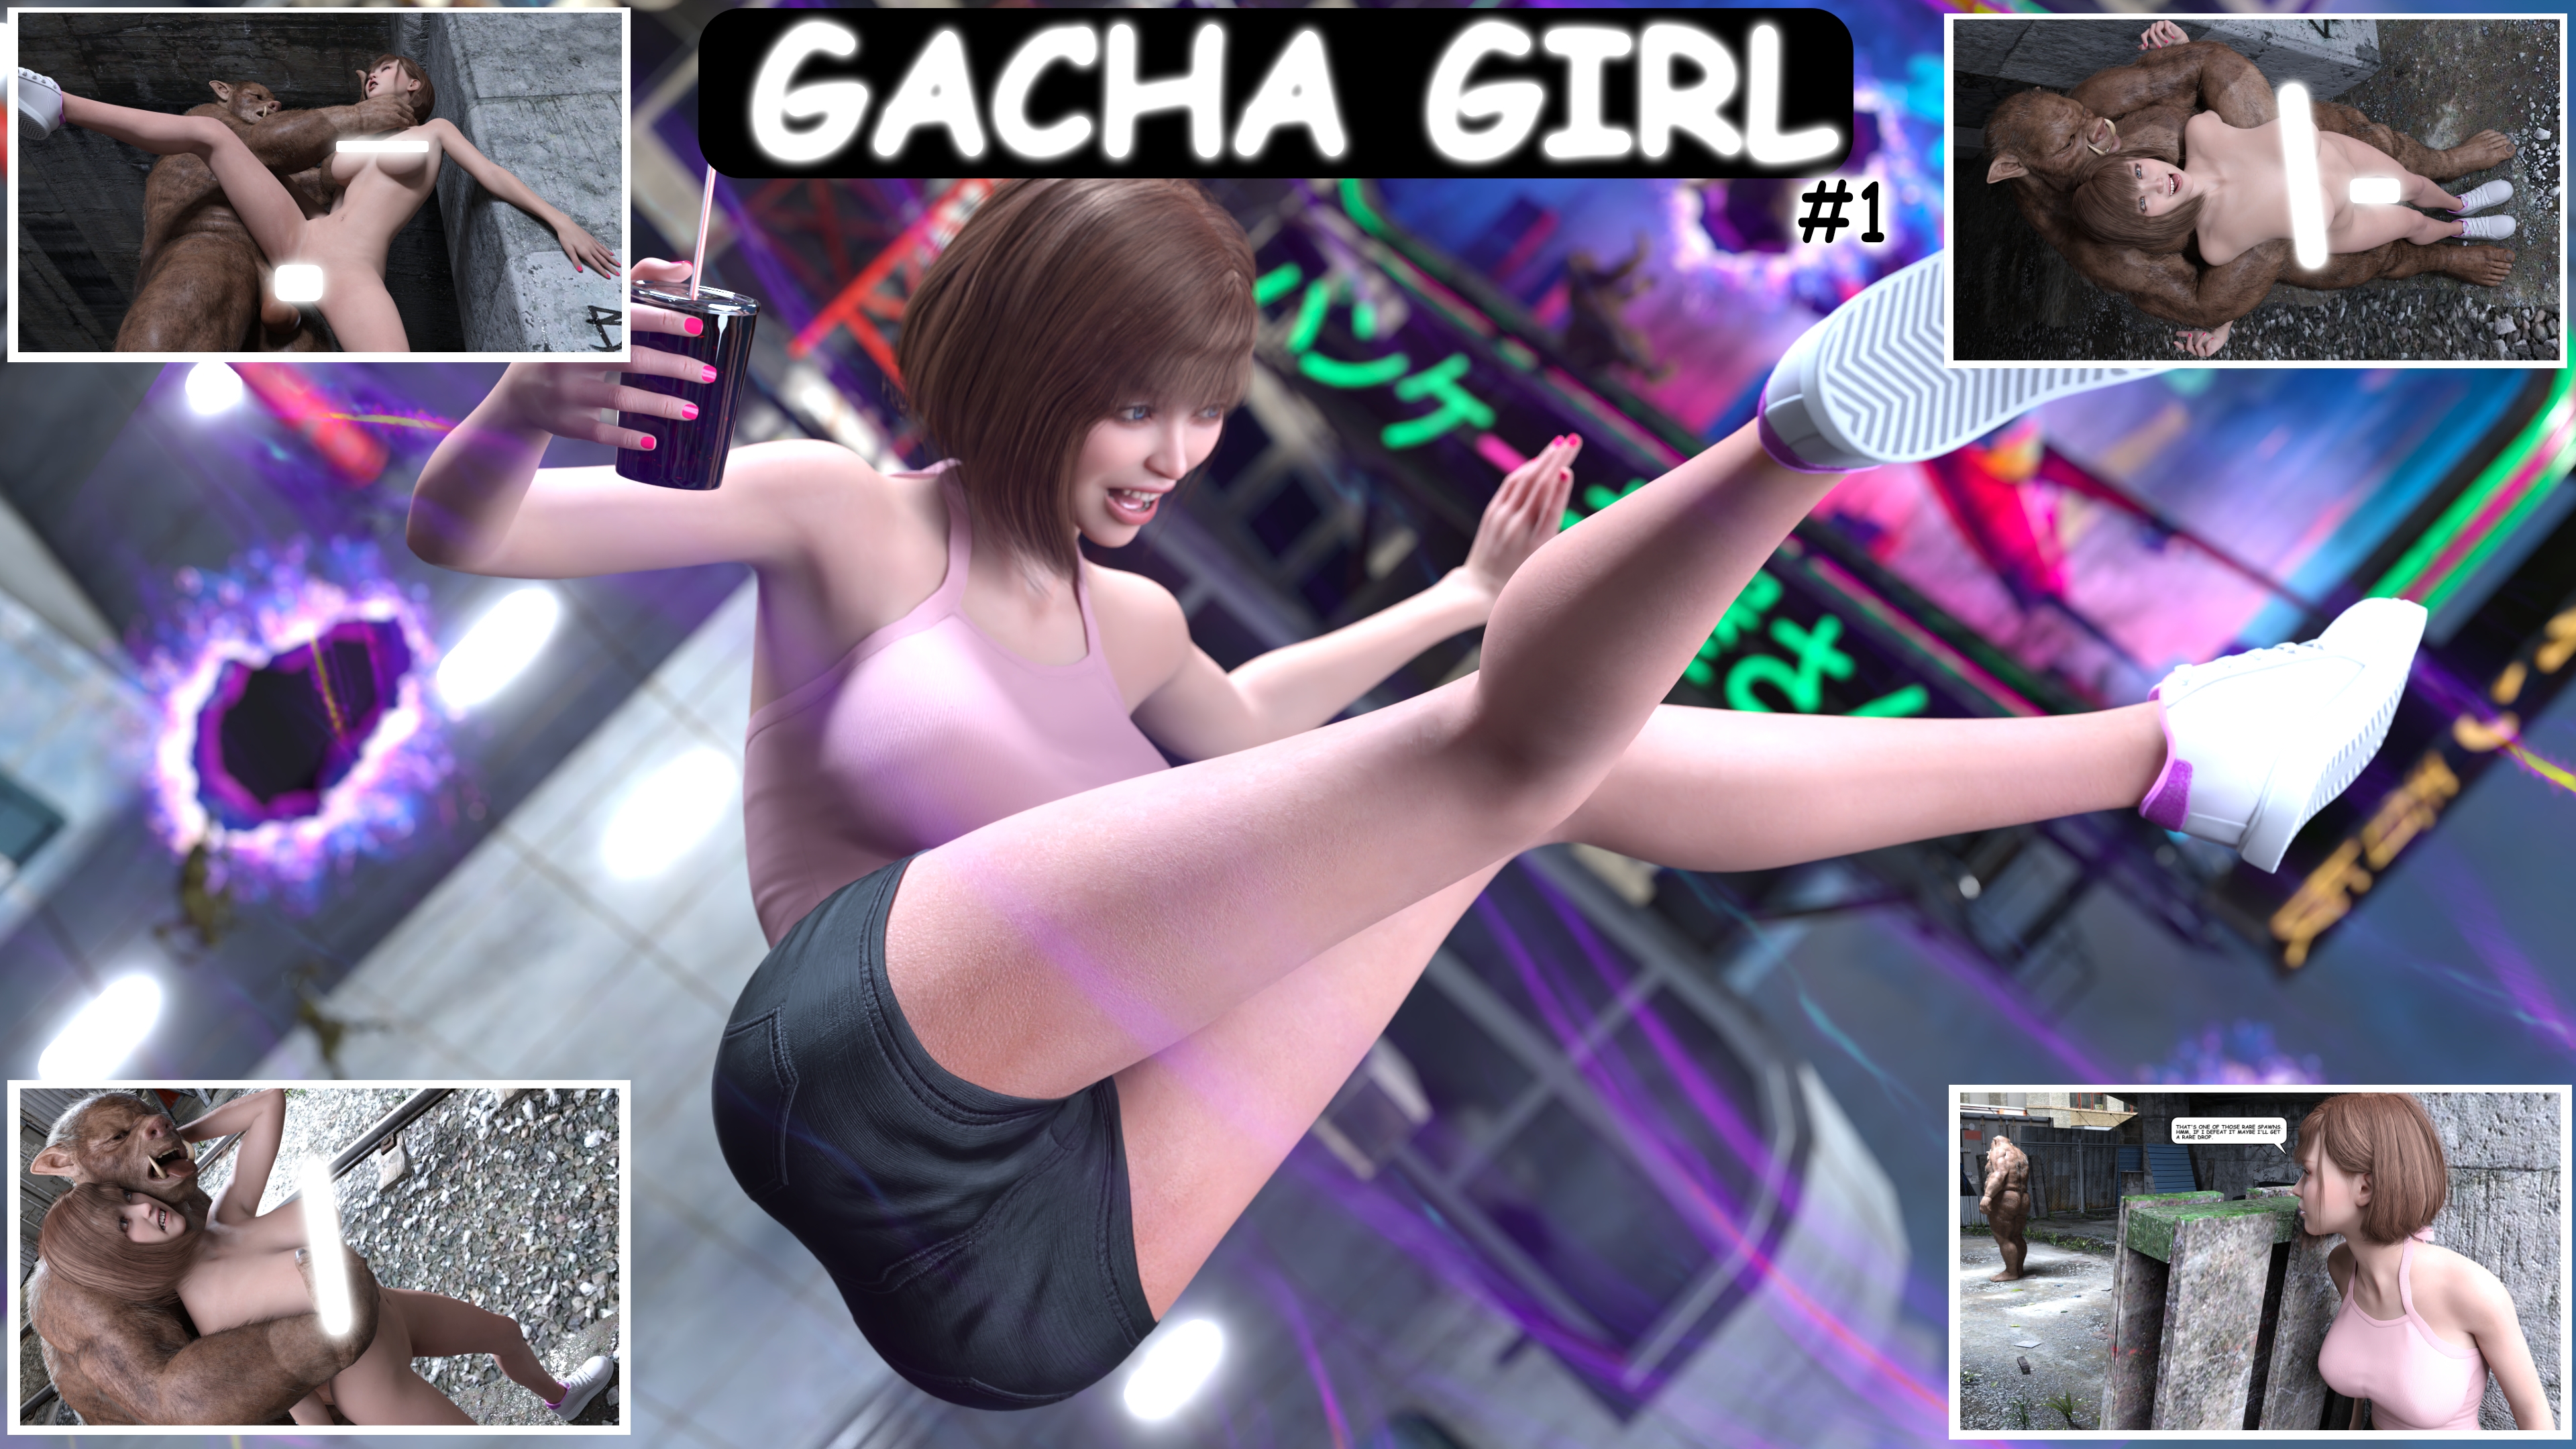 https://otbjacko.gumroad.com/l/Gachagirl1?layout=profile